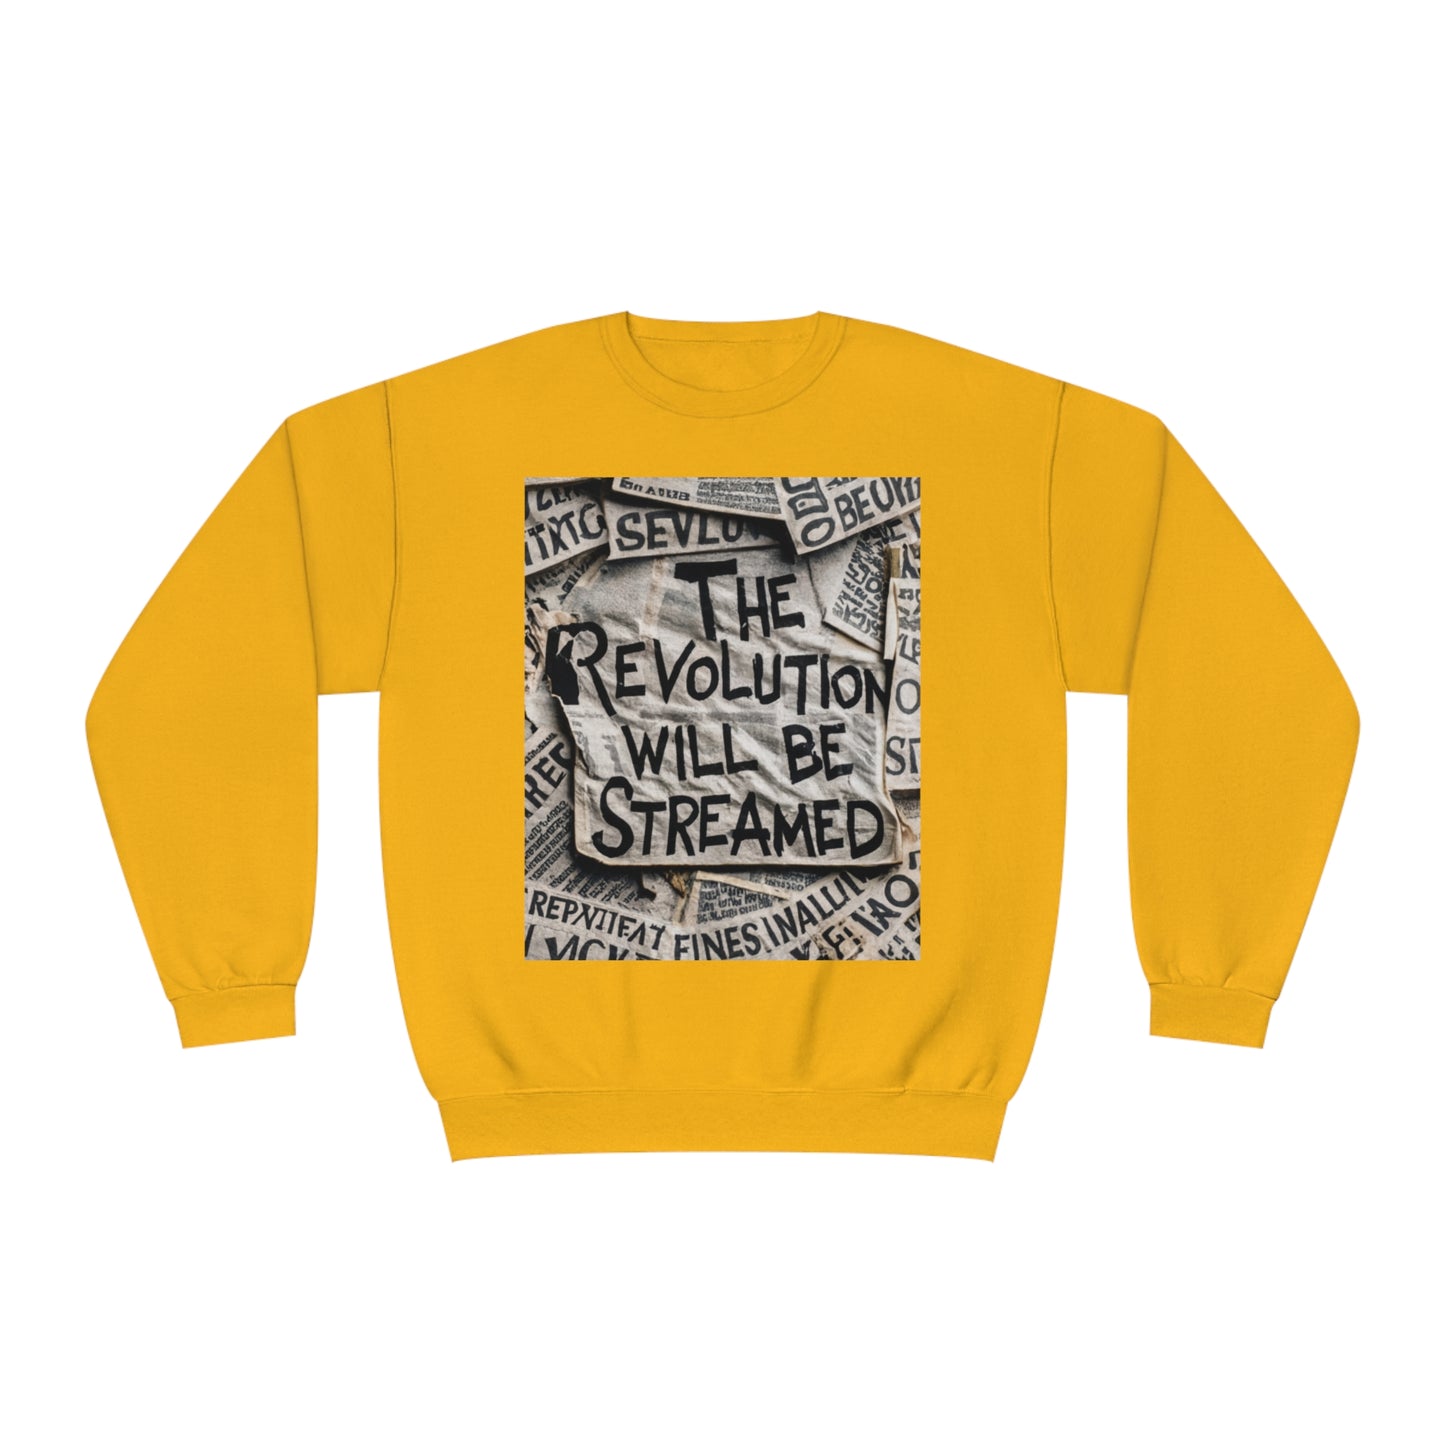 The Revolution will be televised - Sweatshirt